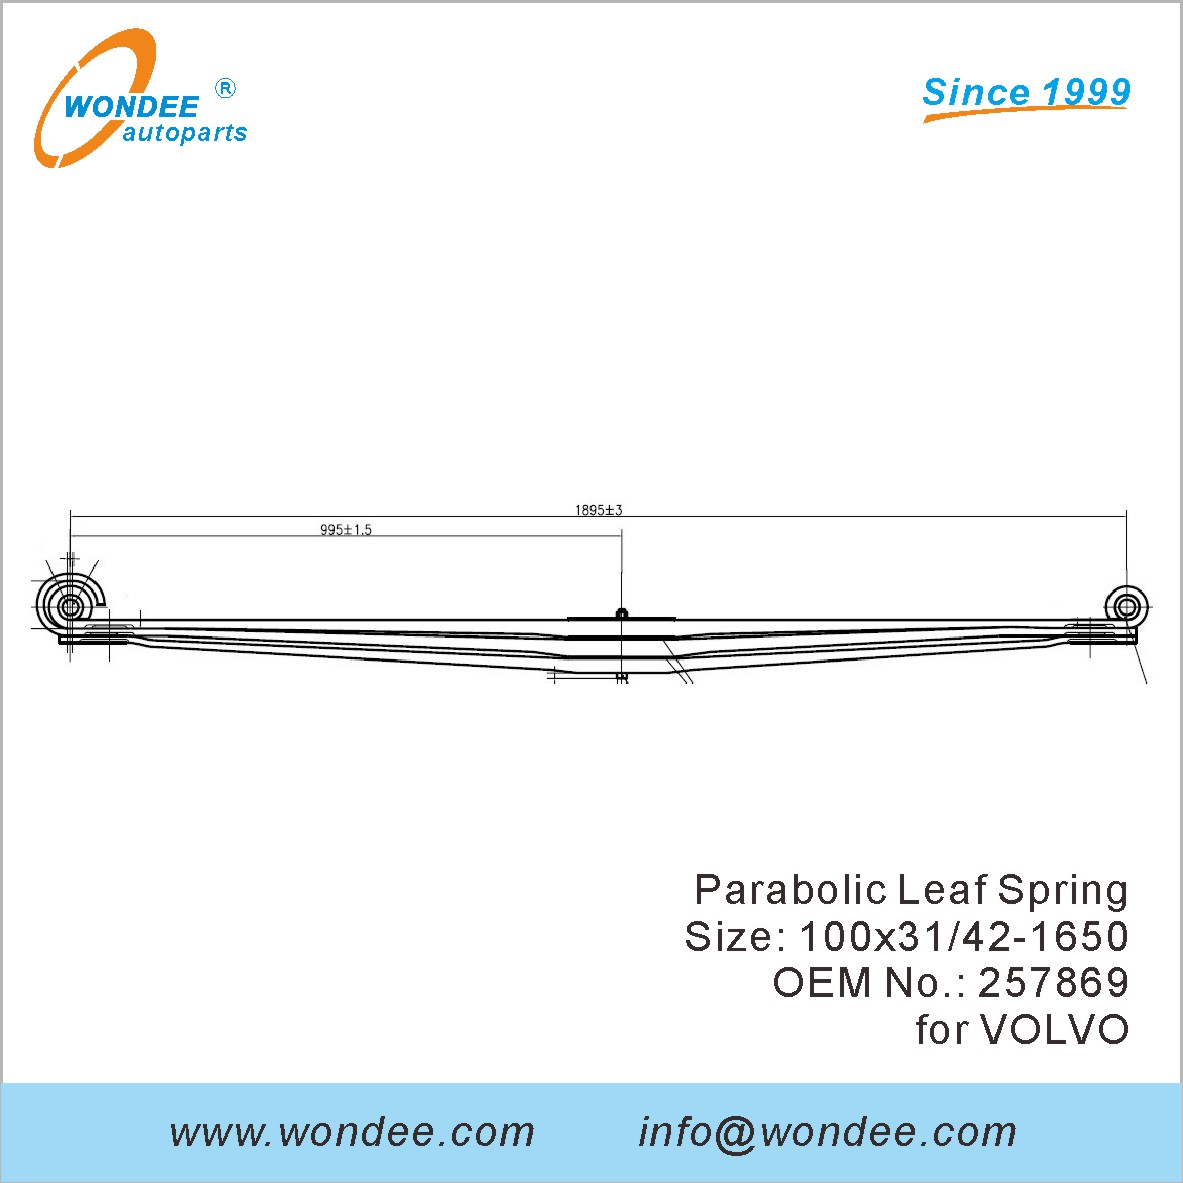 WONDEE heavy duty parabolic Leaf Spring OEM 257869 for VOLVO